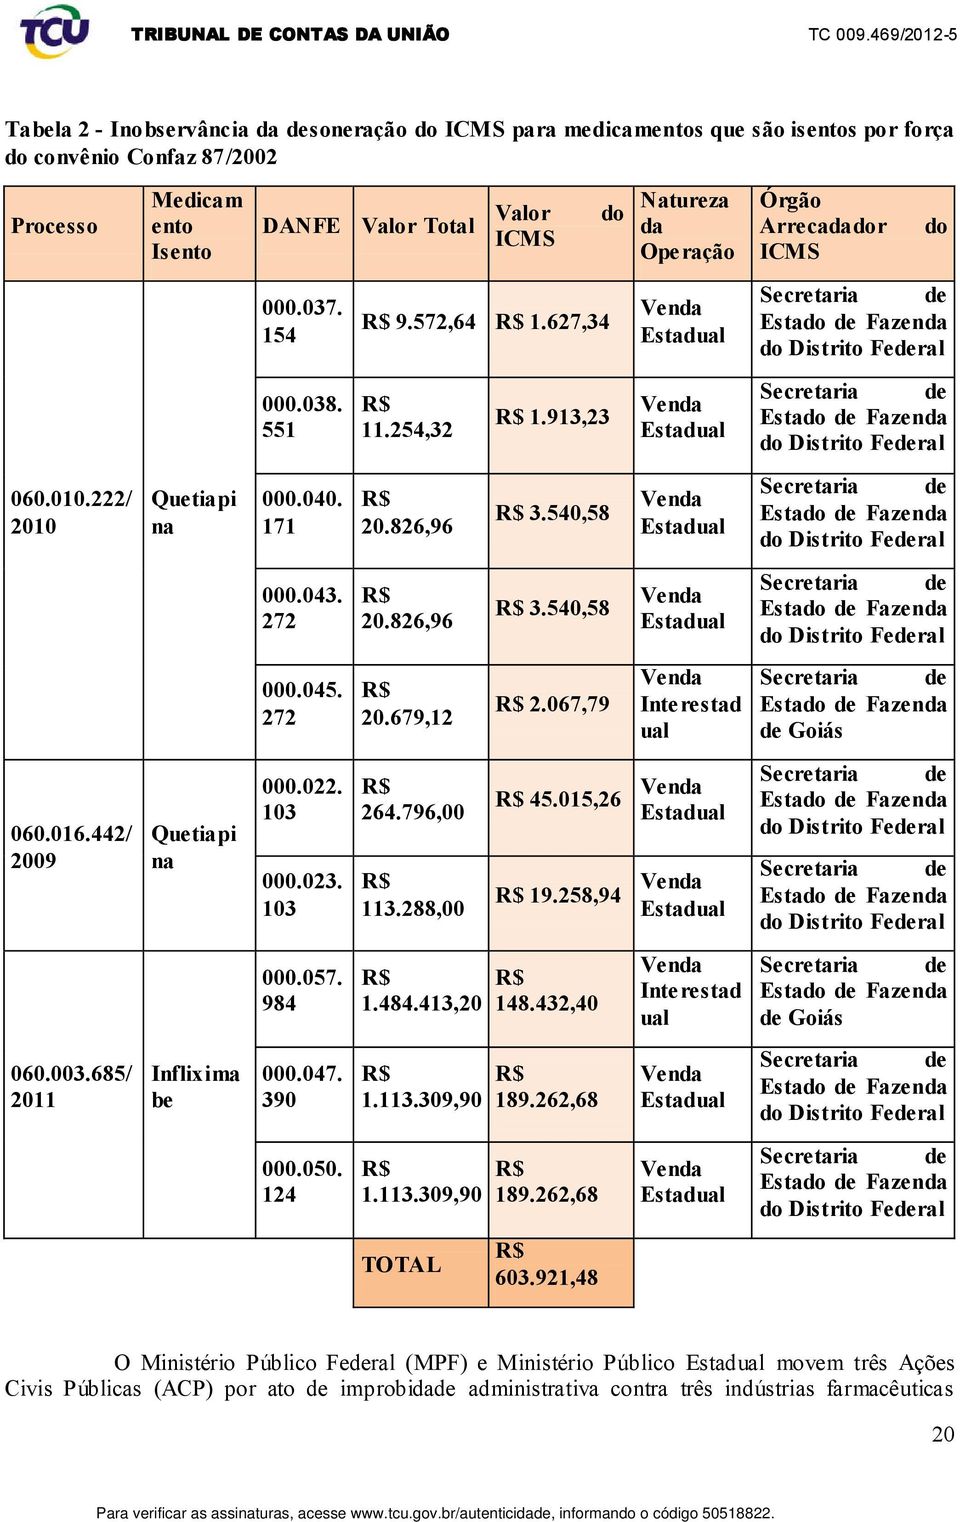 913,23 Venda Estadual Secretaria de Estado de Fazenda do Distrito Federal 060.010.222/ 2010 Quetiapi na 000.040. 171 R$ 20.826,96 R$ 3.